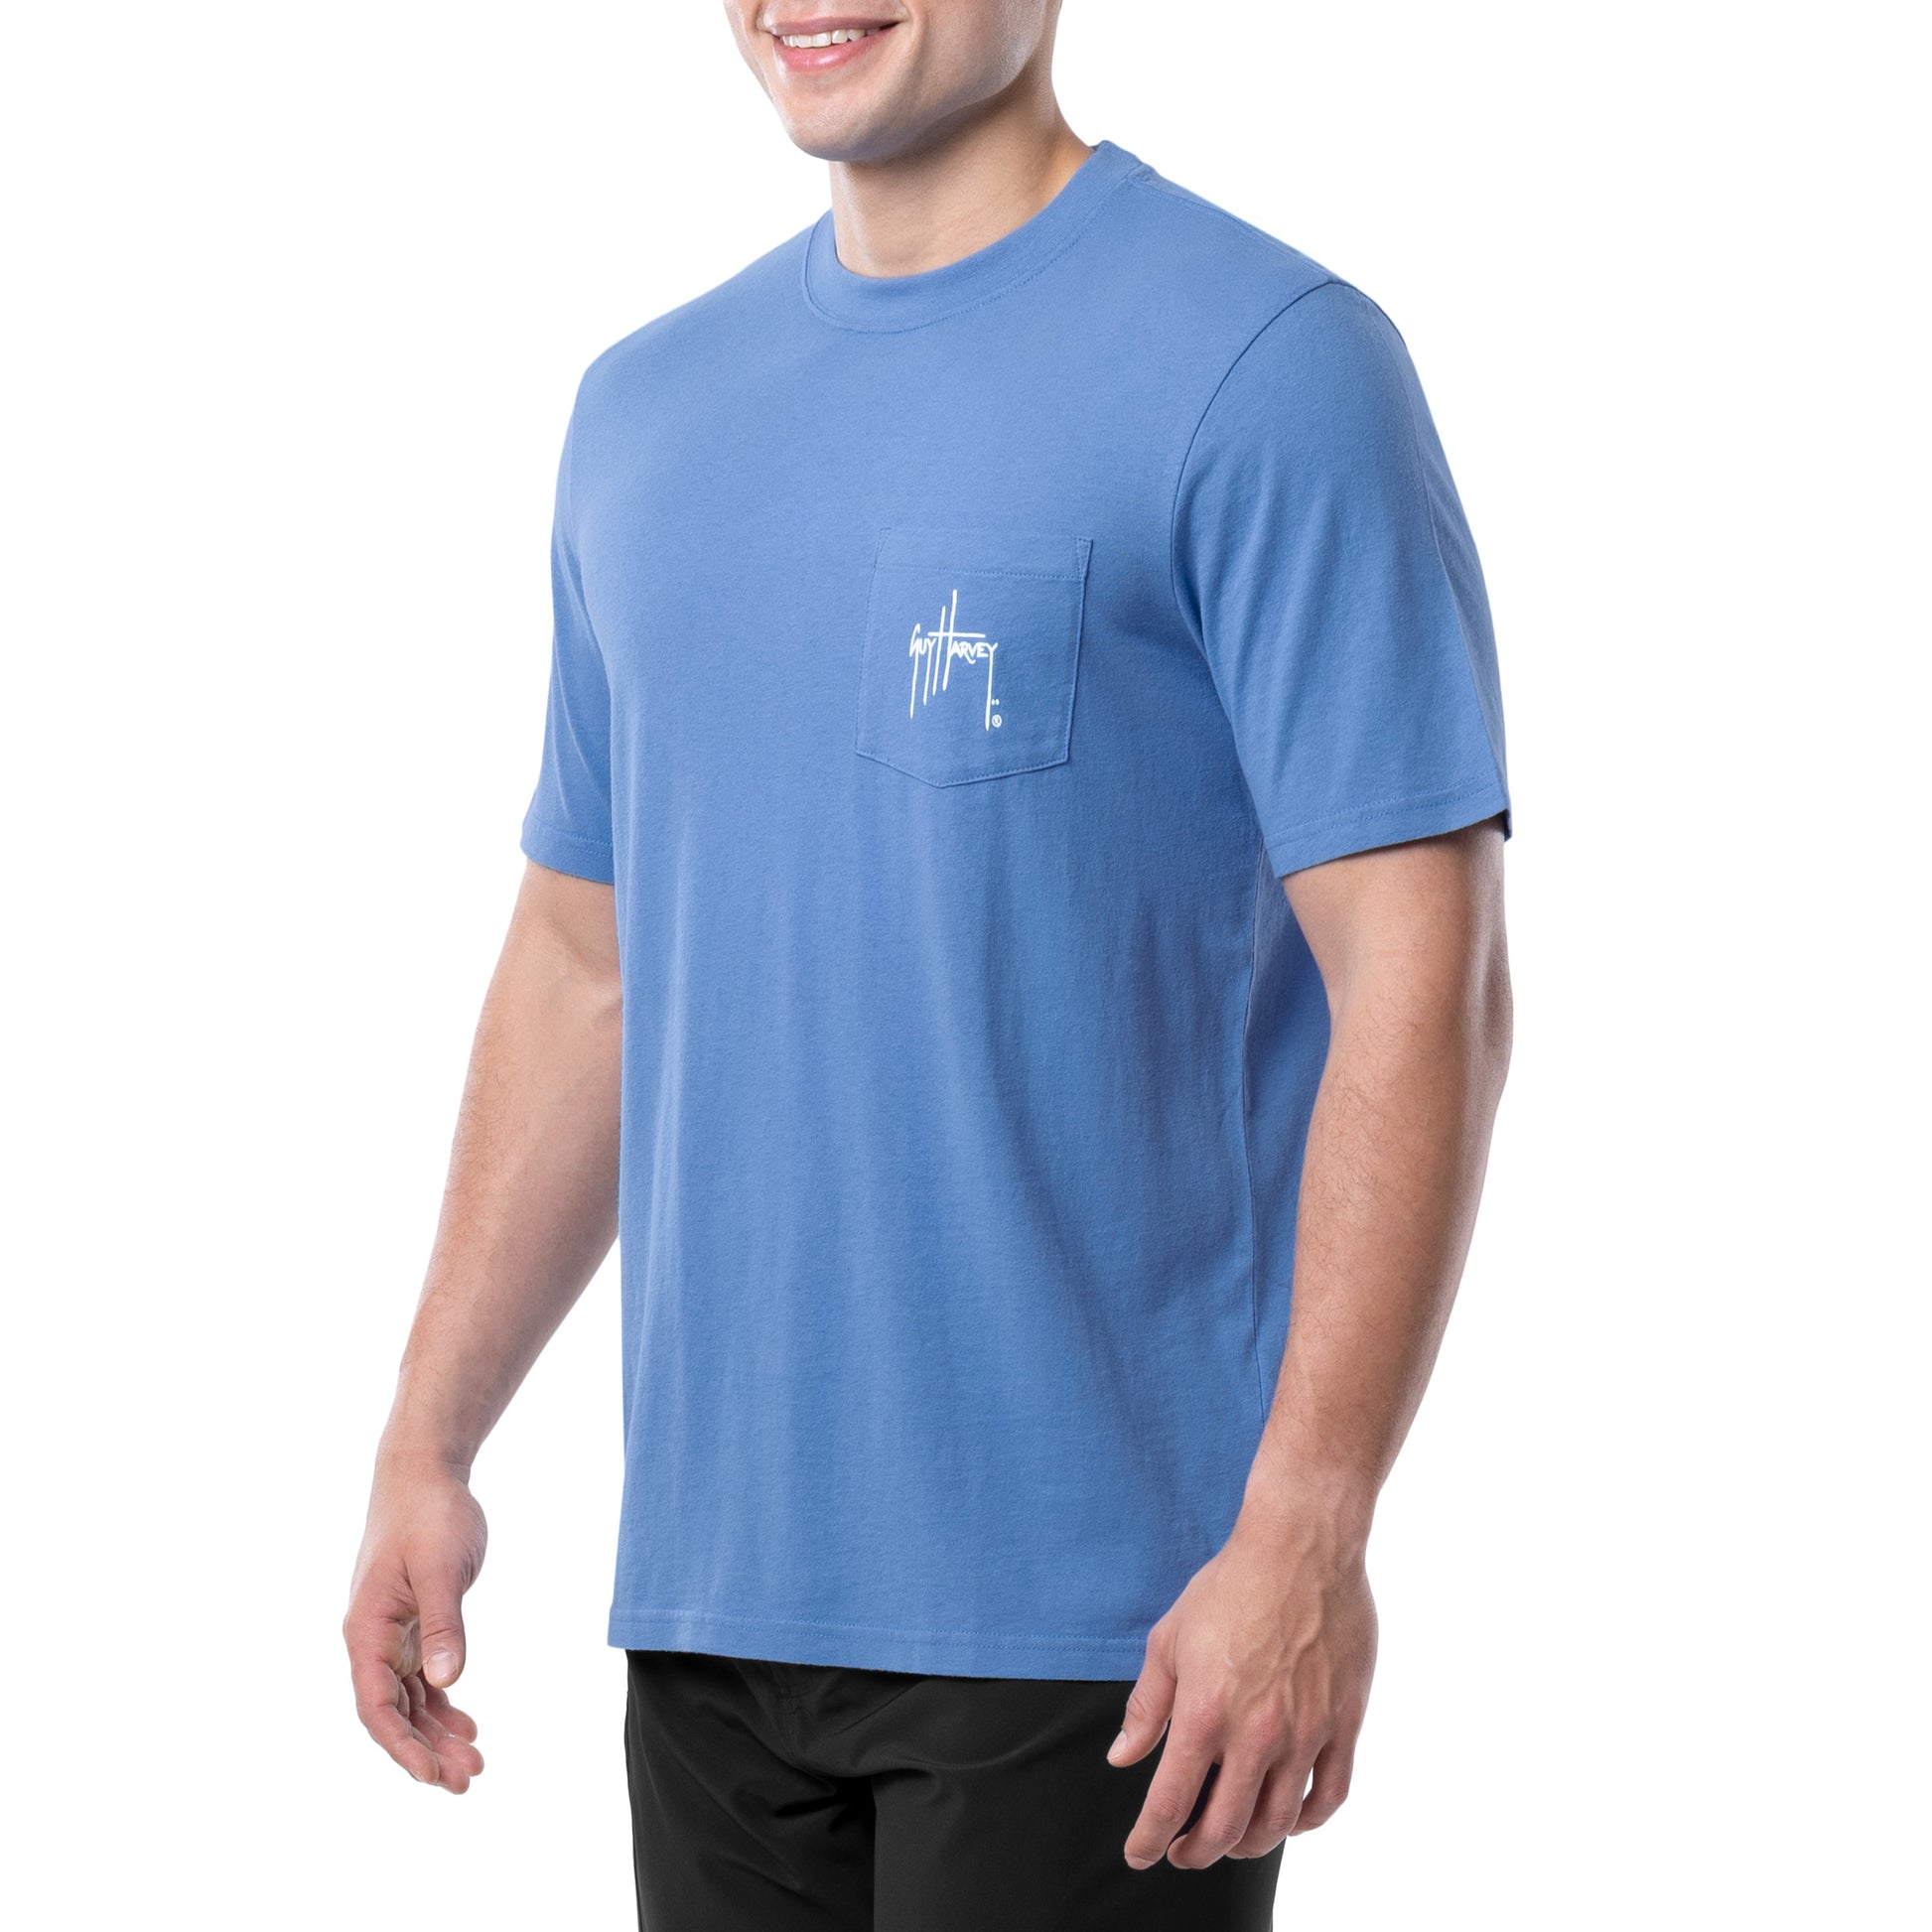 J Khaki Boys Fishing Shirt Size Medium Turquoise Blue Vented